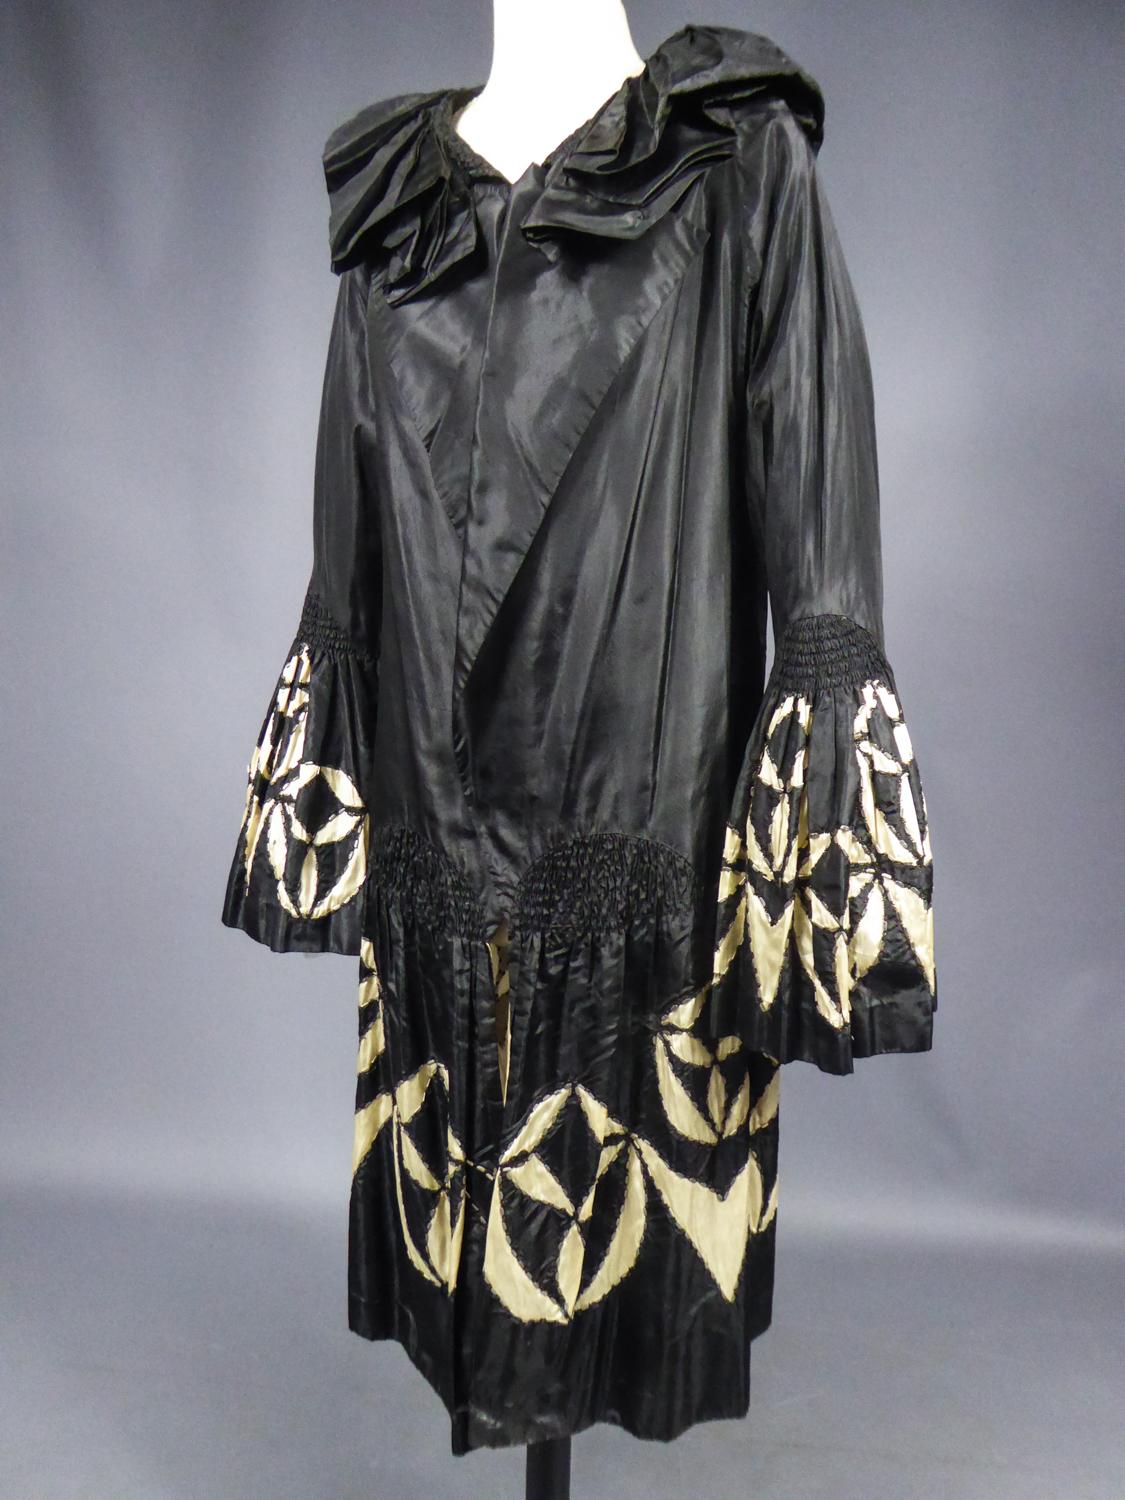 Women's A Rare Redfern Evening Coat in Black And Cream Taffeta Silk Circa 1929